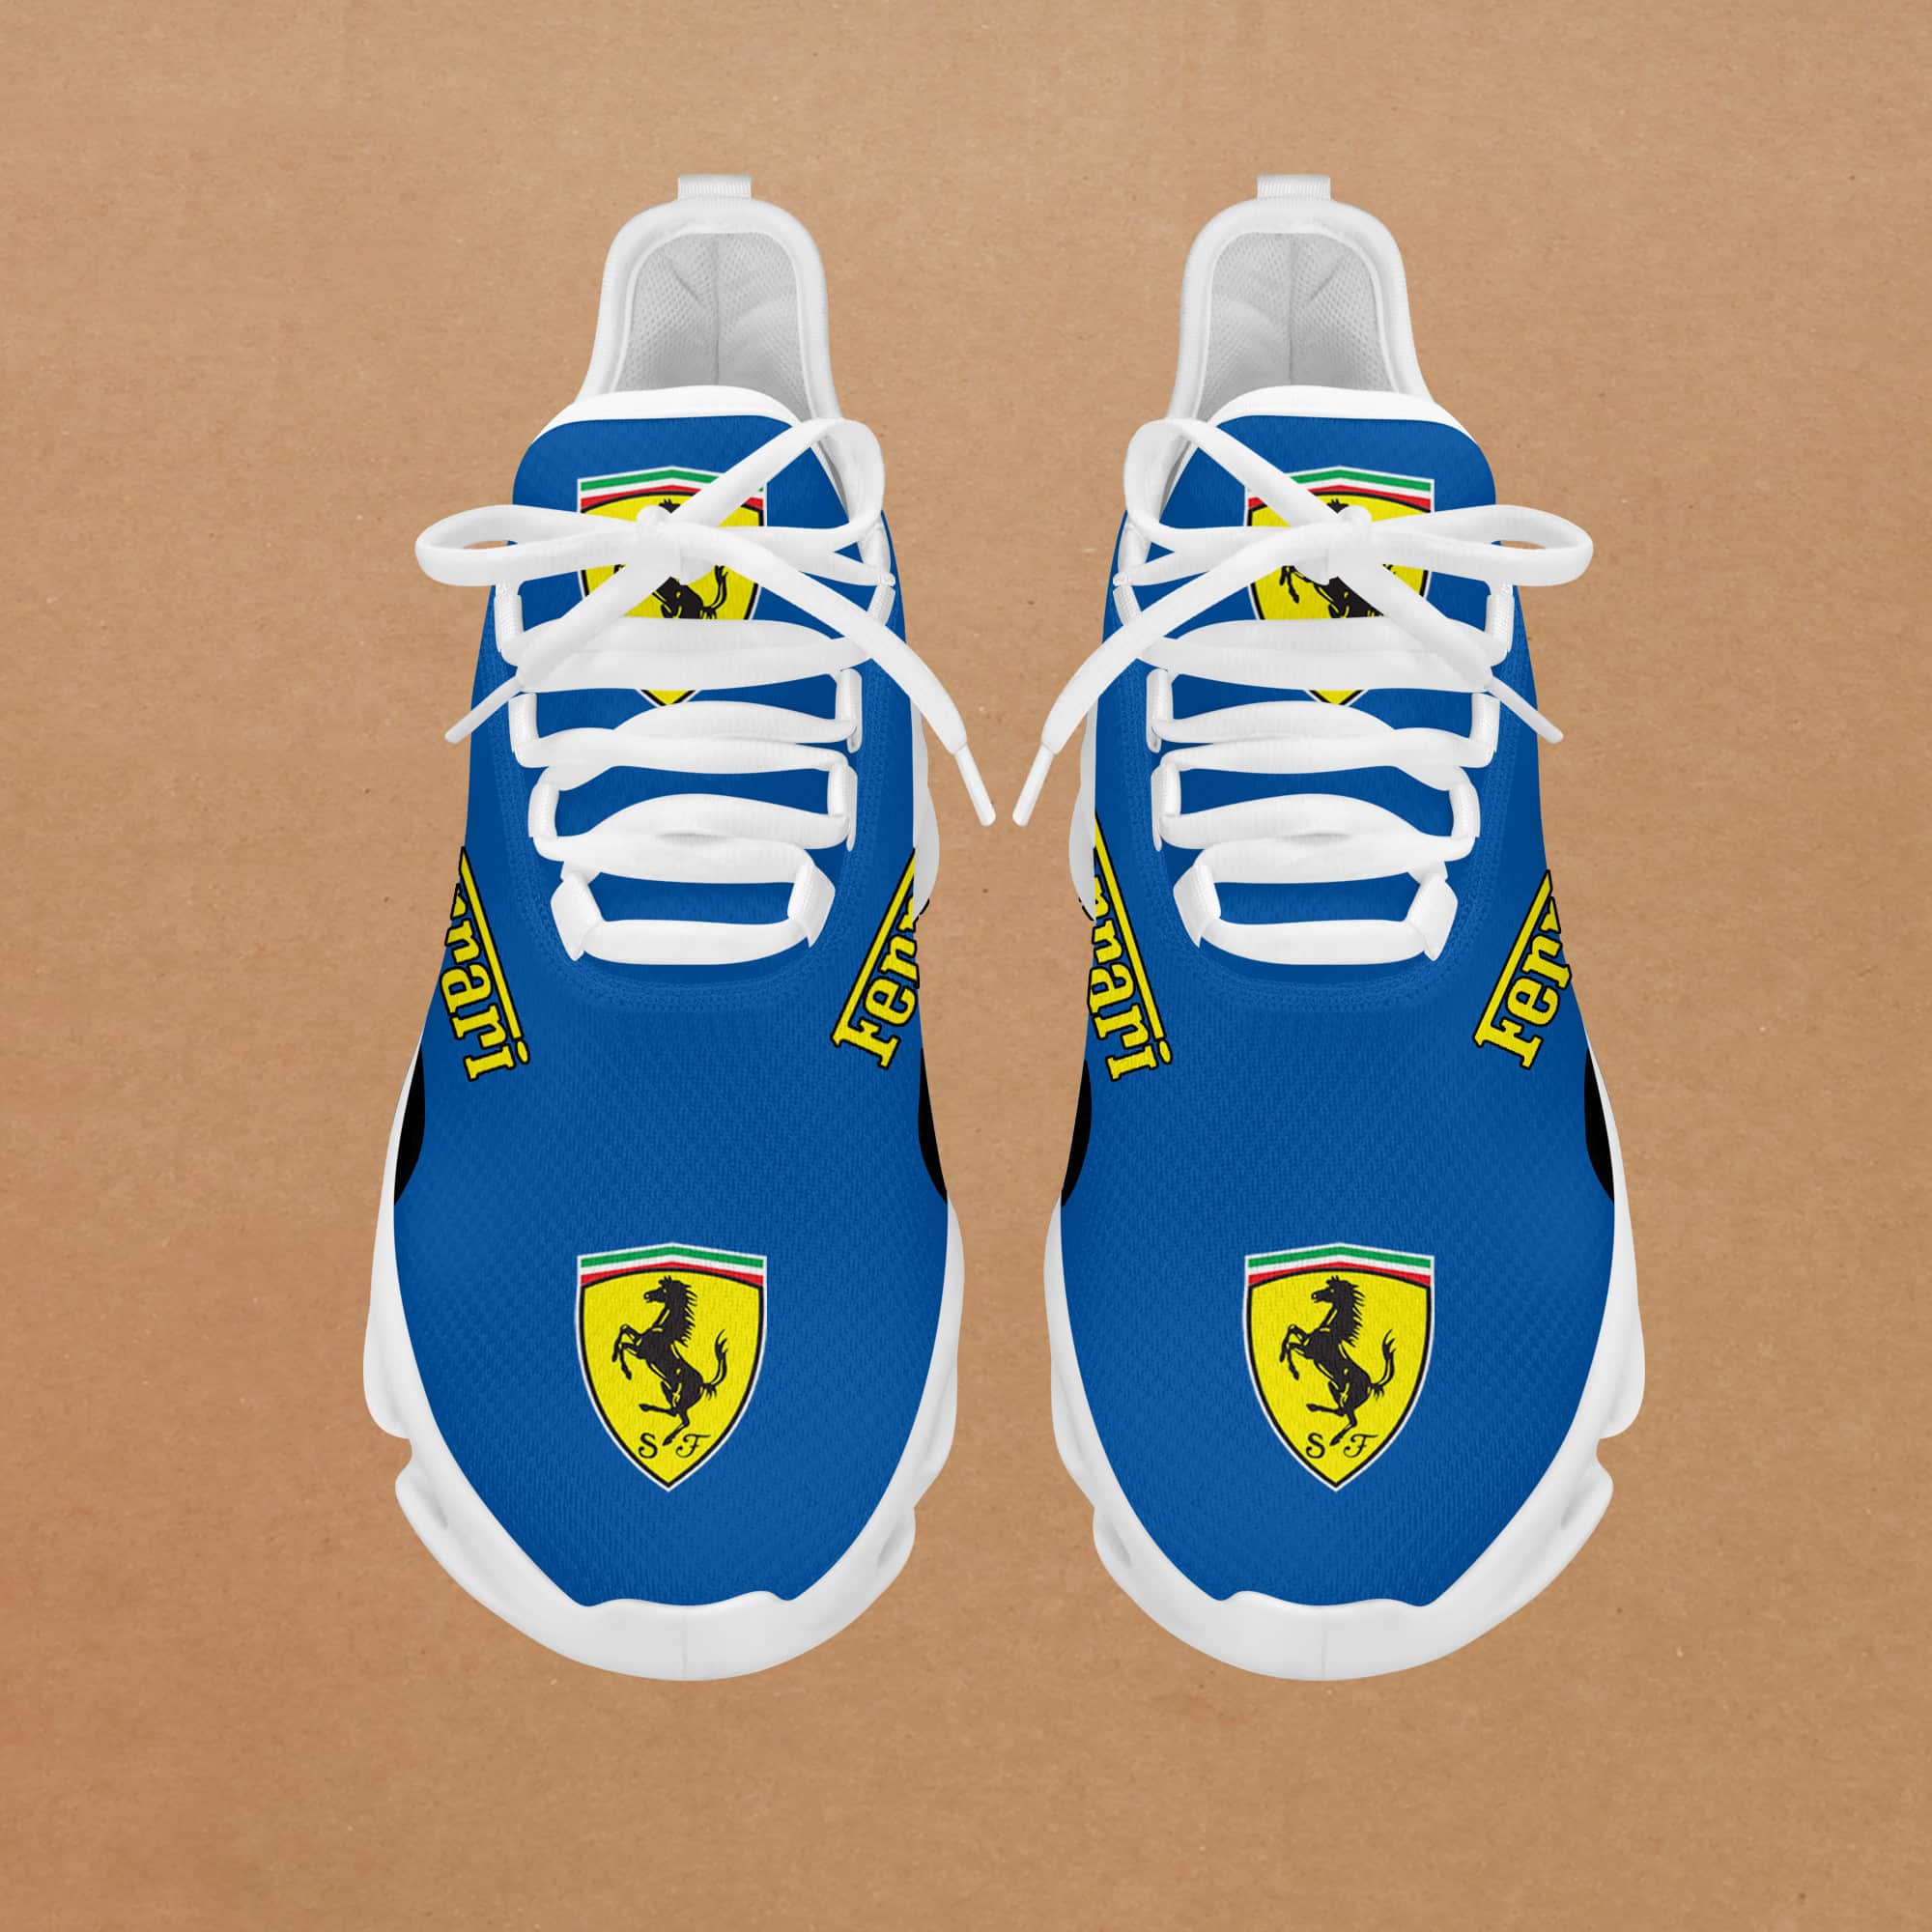 Ferrari Sneaker Running Shoes Max Soul Shoes Sneakers Ver 9 3